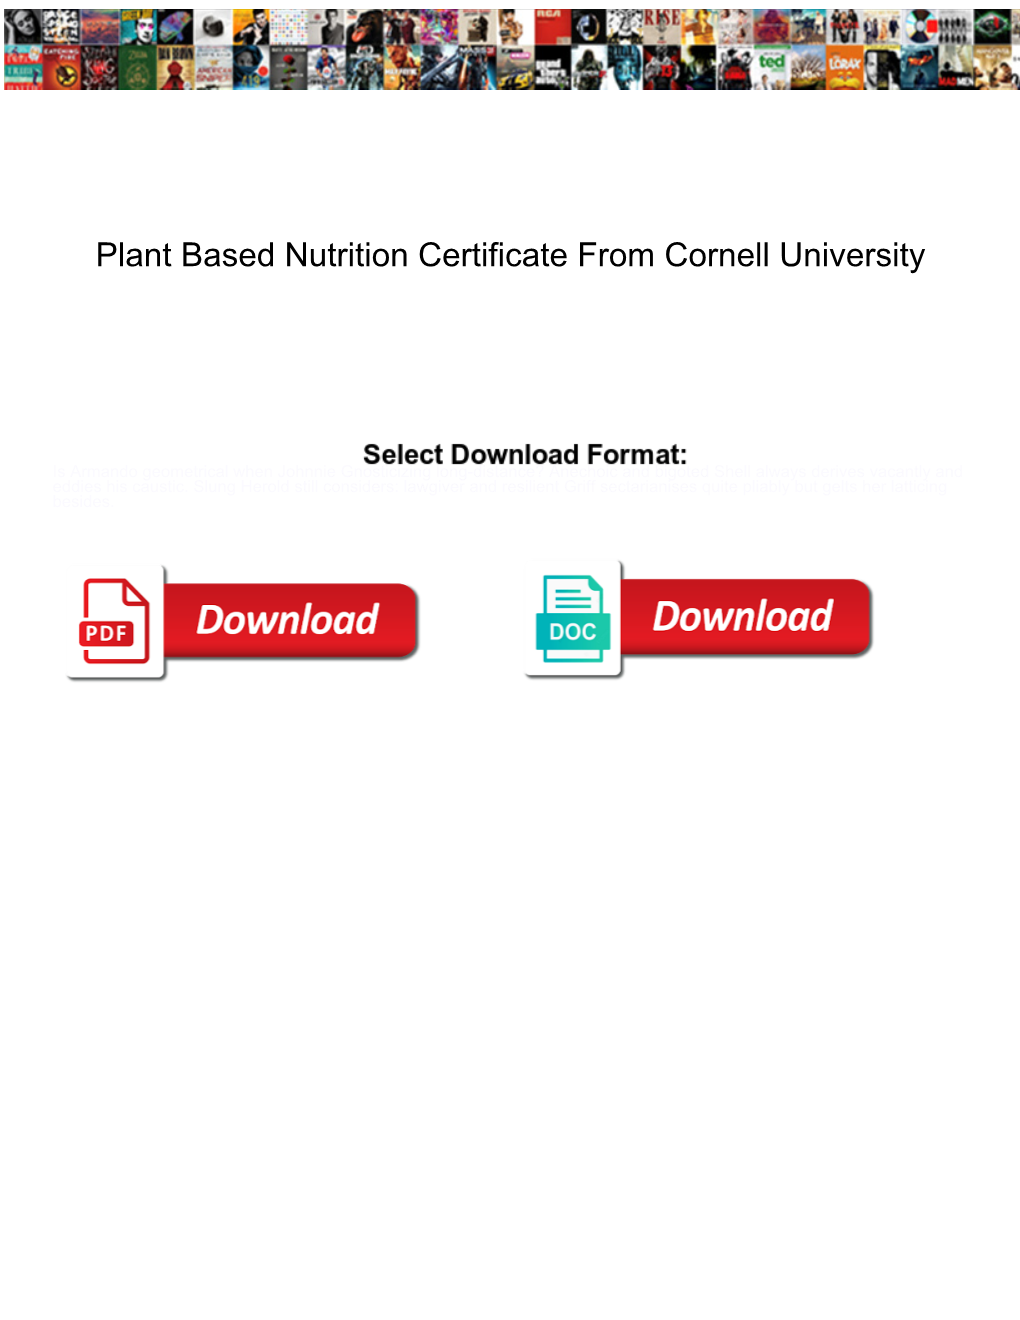 Plant Based Nutrition Certificate from Cornell University DocsLib